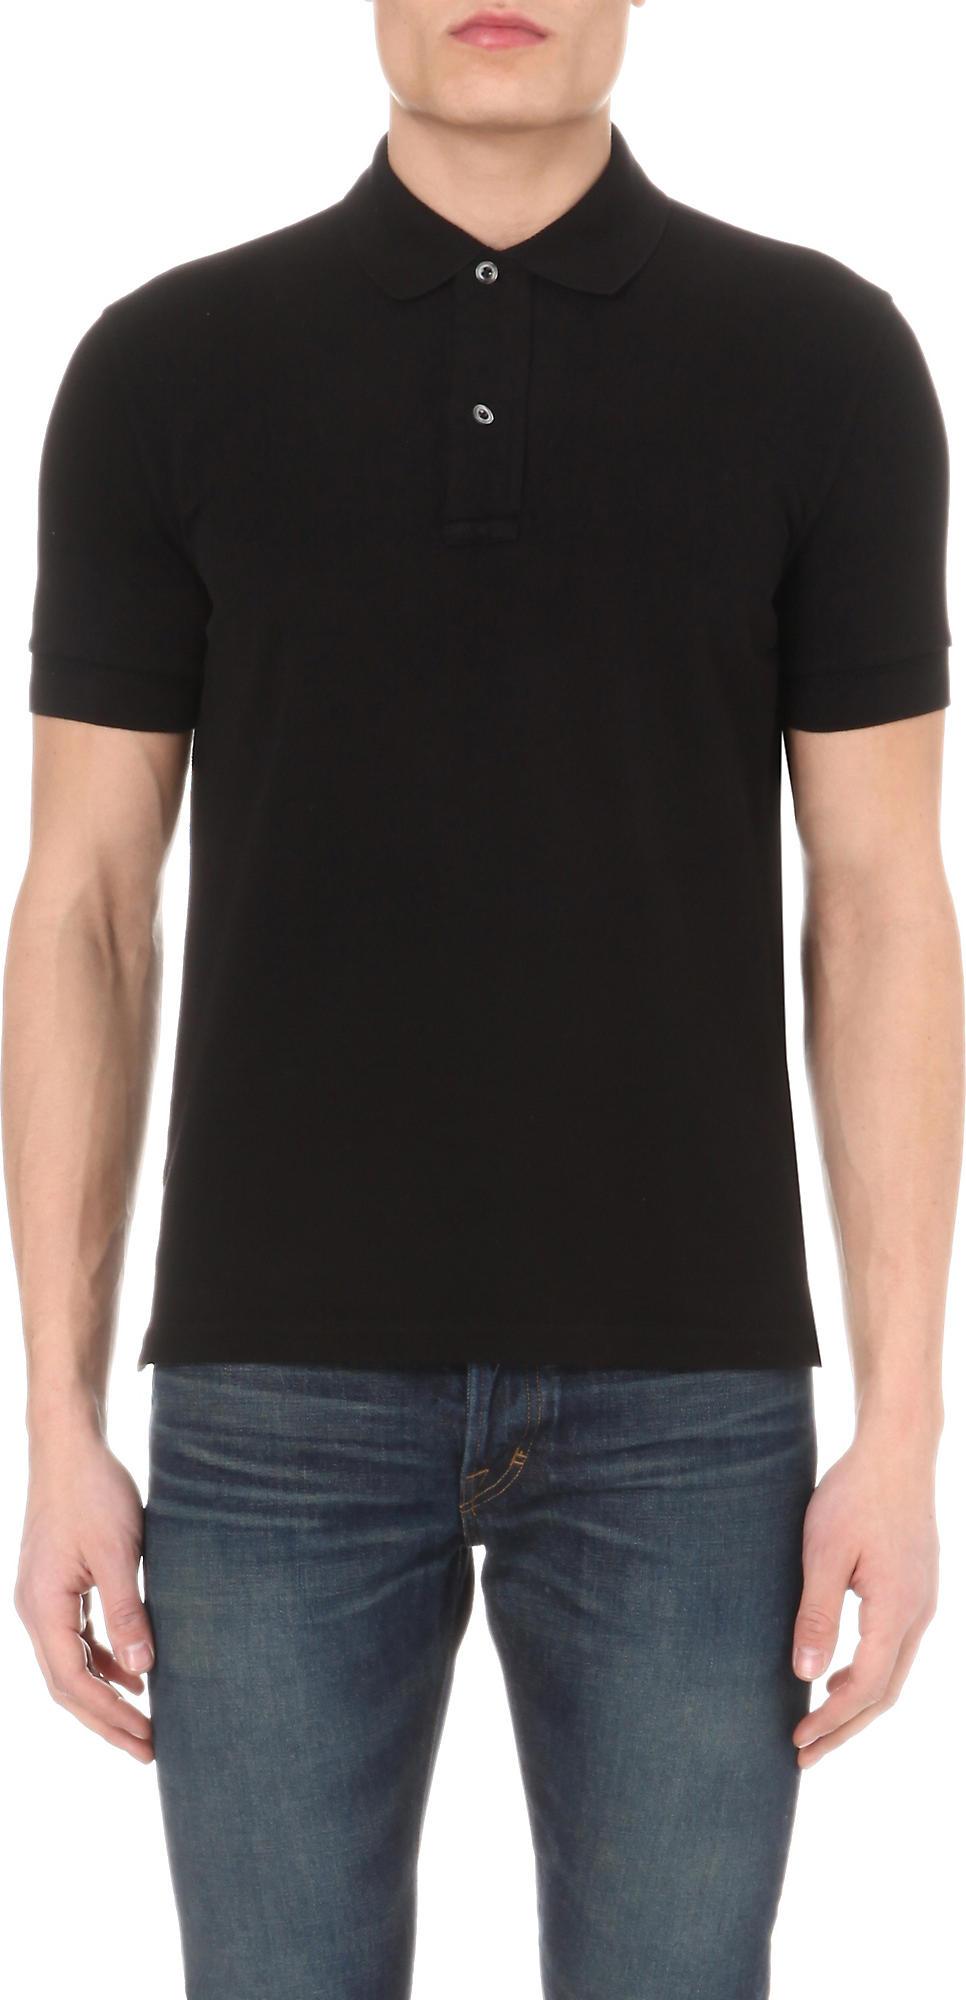 Tom Ford Short-sleeved Cotton-piqué Polo Shirt in Black for Men - Lyst